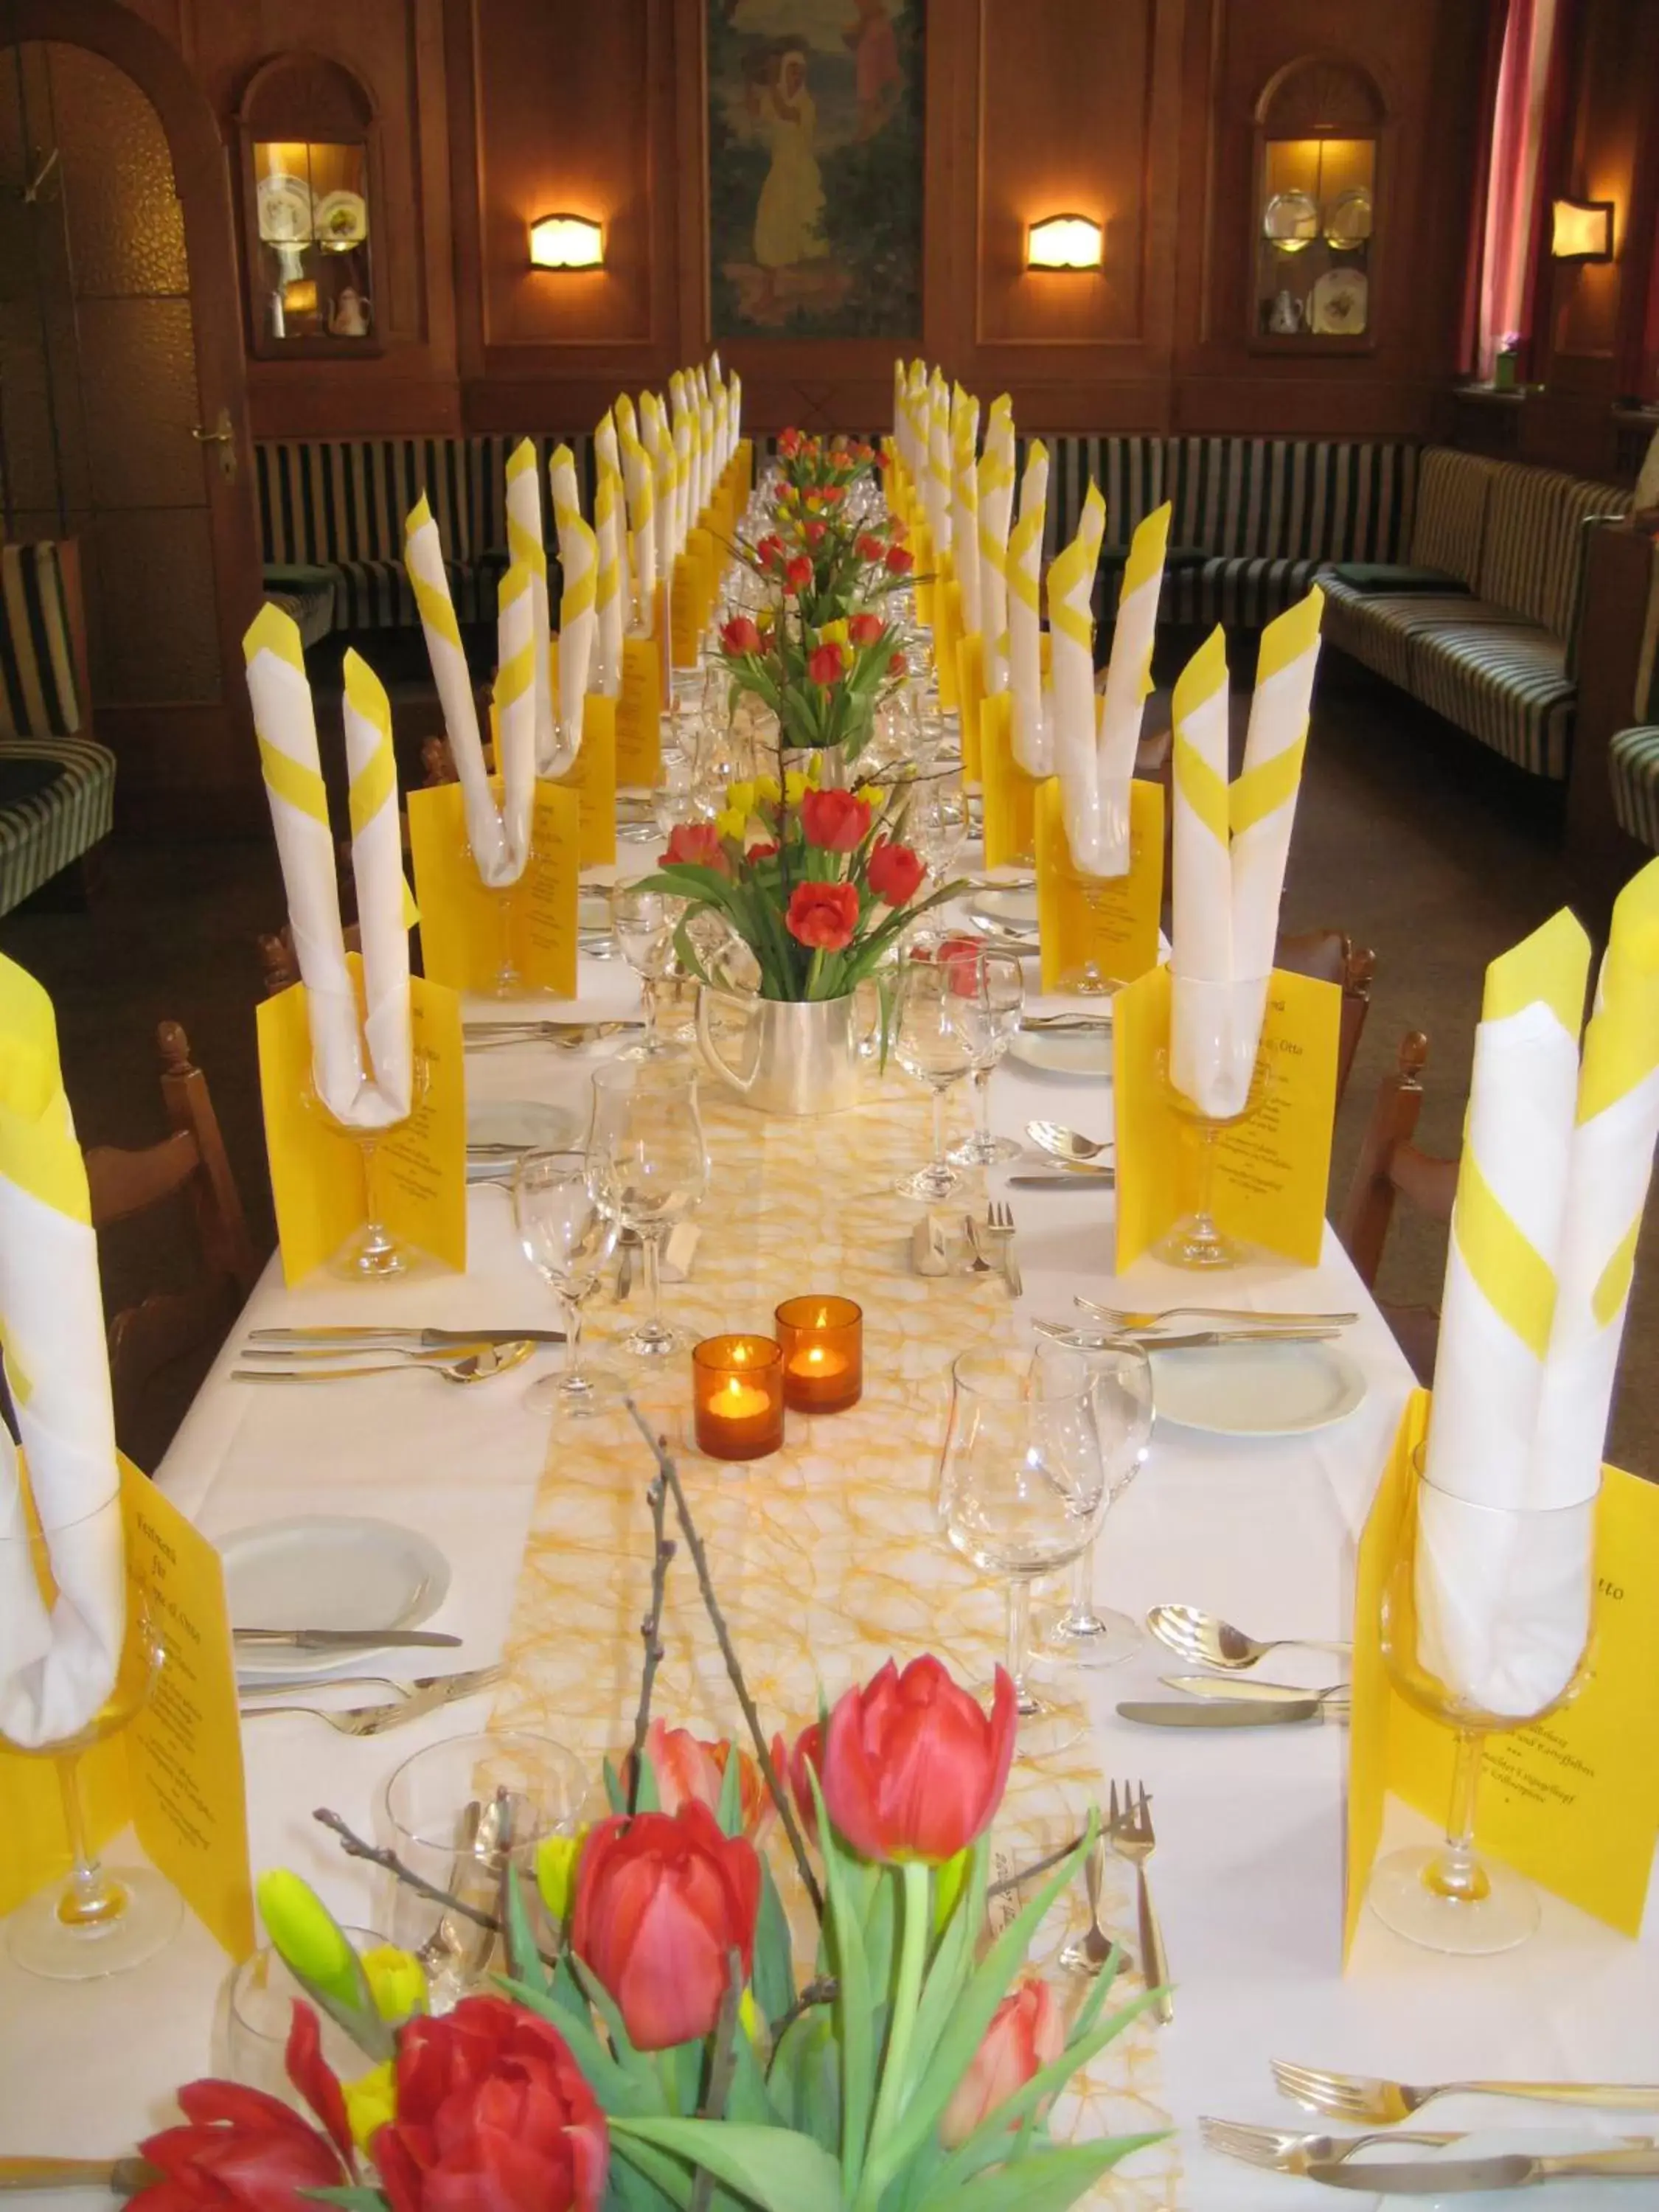 Restaurant/places to eat, Banquet Facilities in Romantik Hotel Markusturm